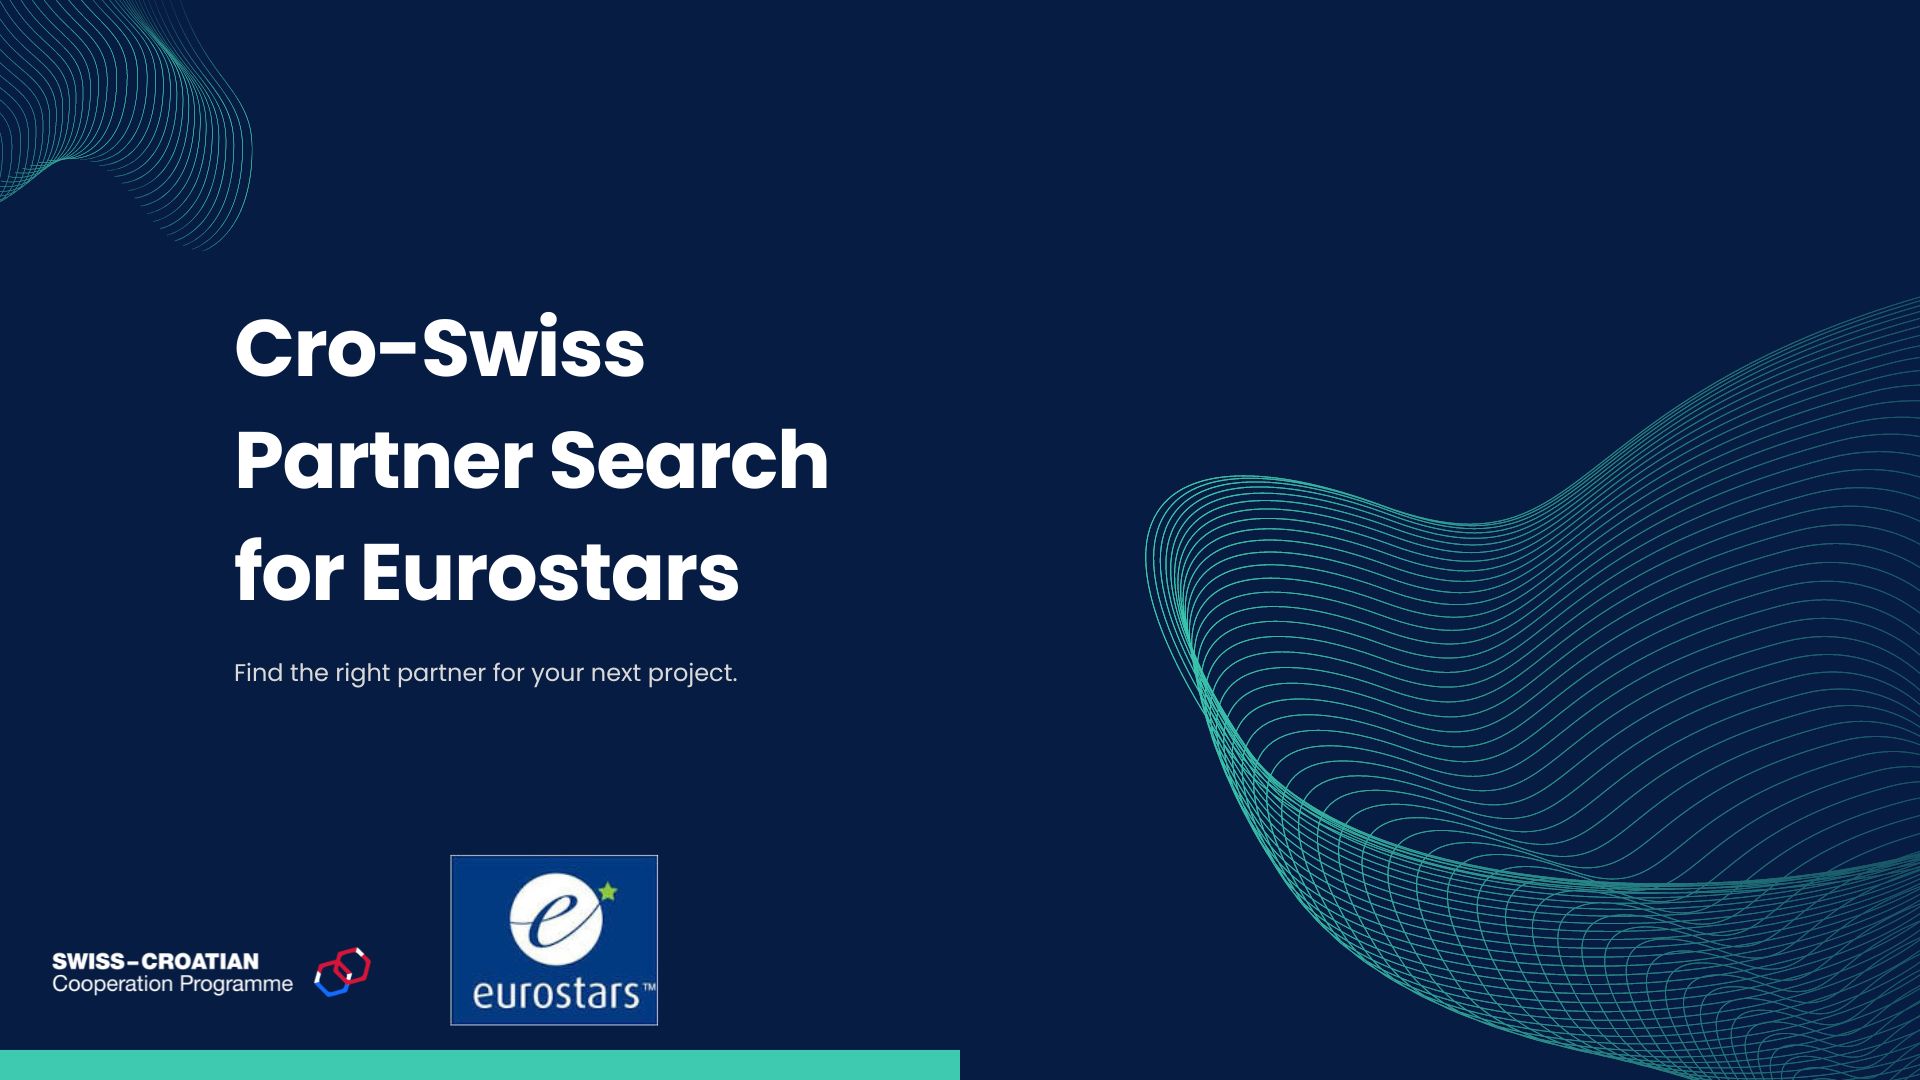 Photo - Cro-Swiss Partner Search for Eurostars